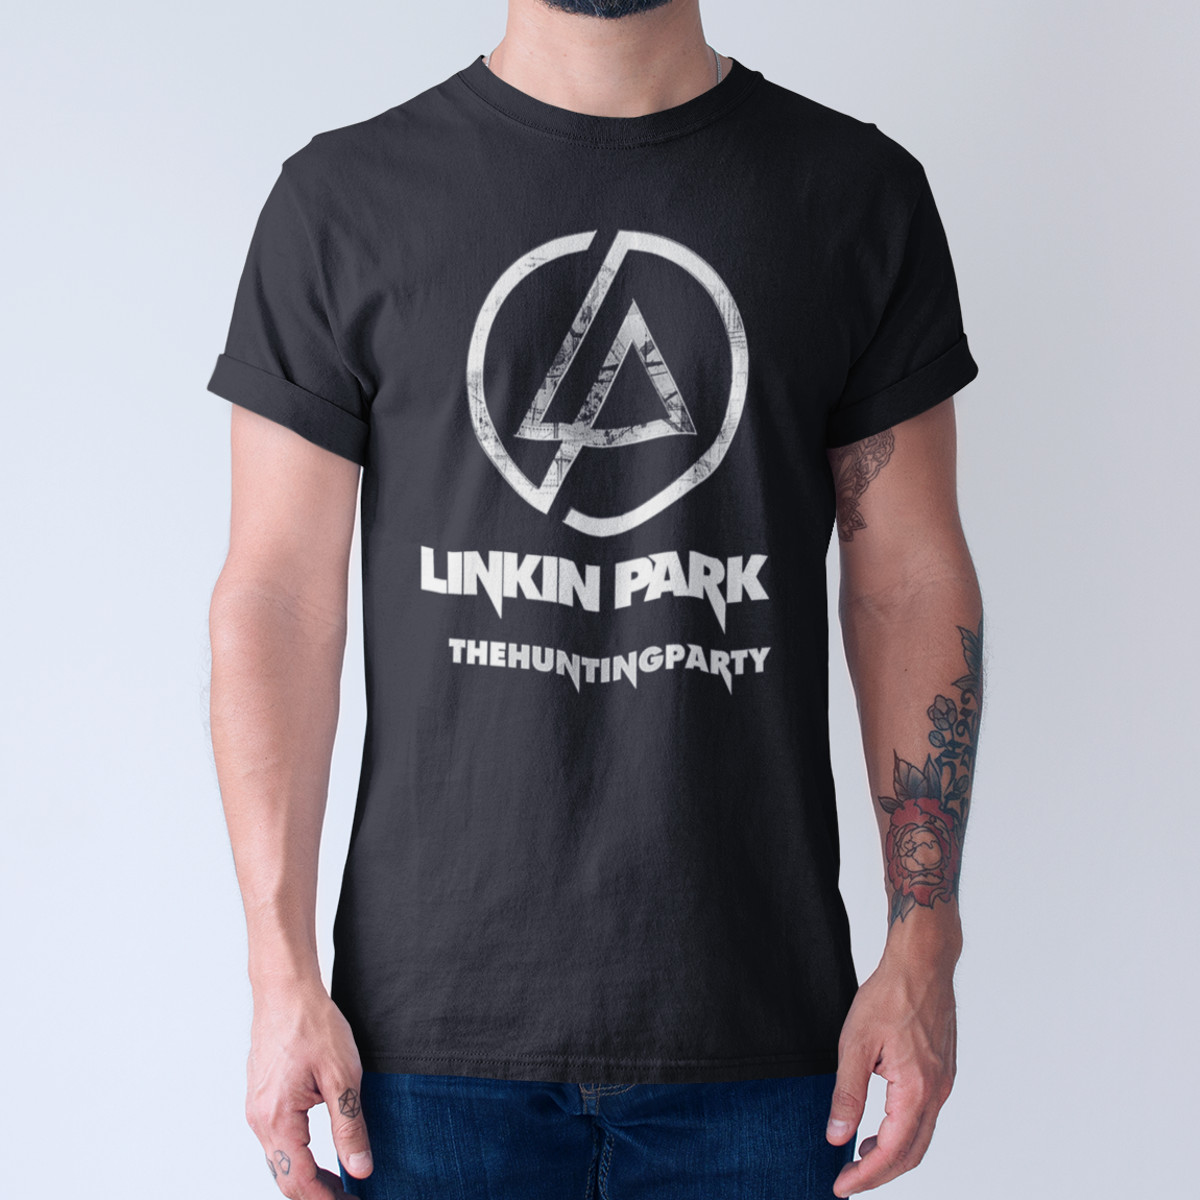 Rock Your Wardrobe: Linkin Park Merchandise Galore